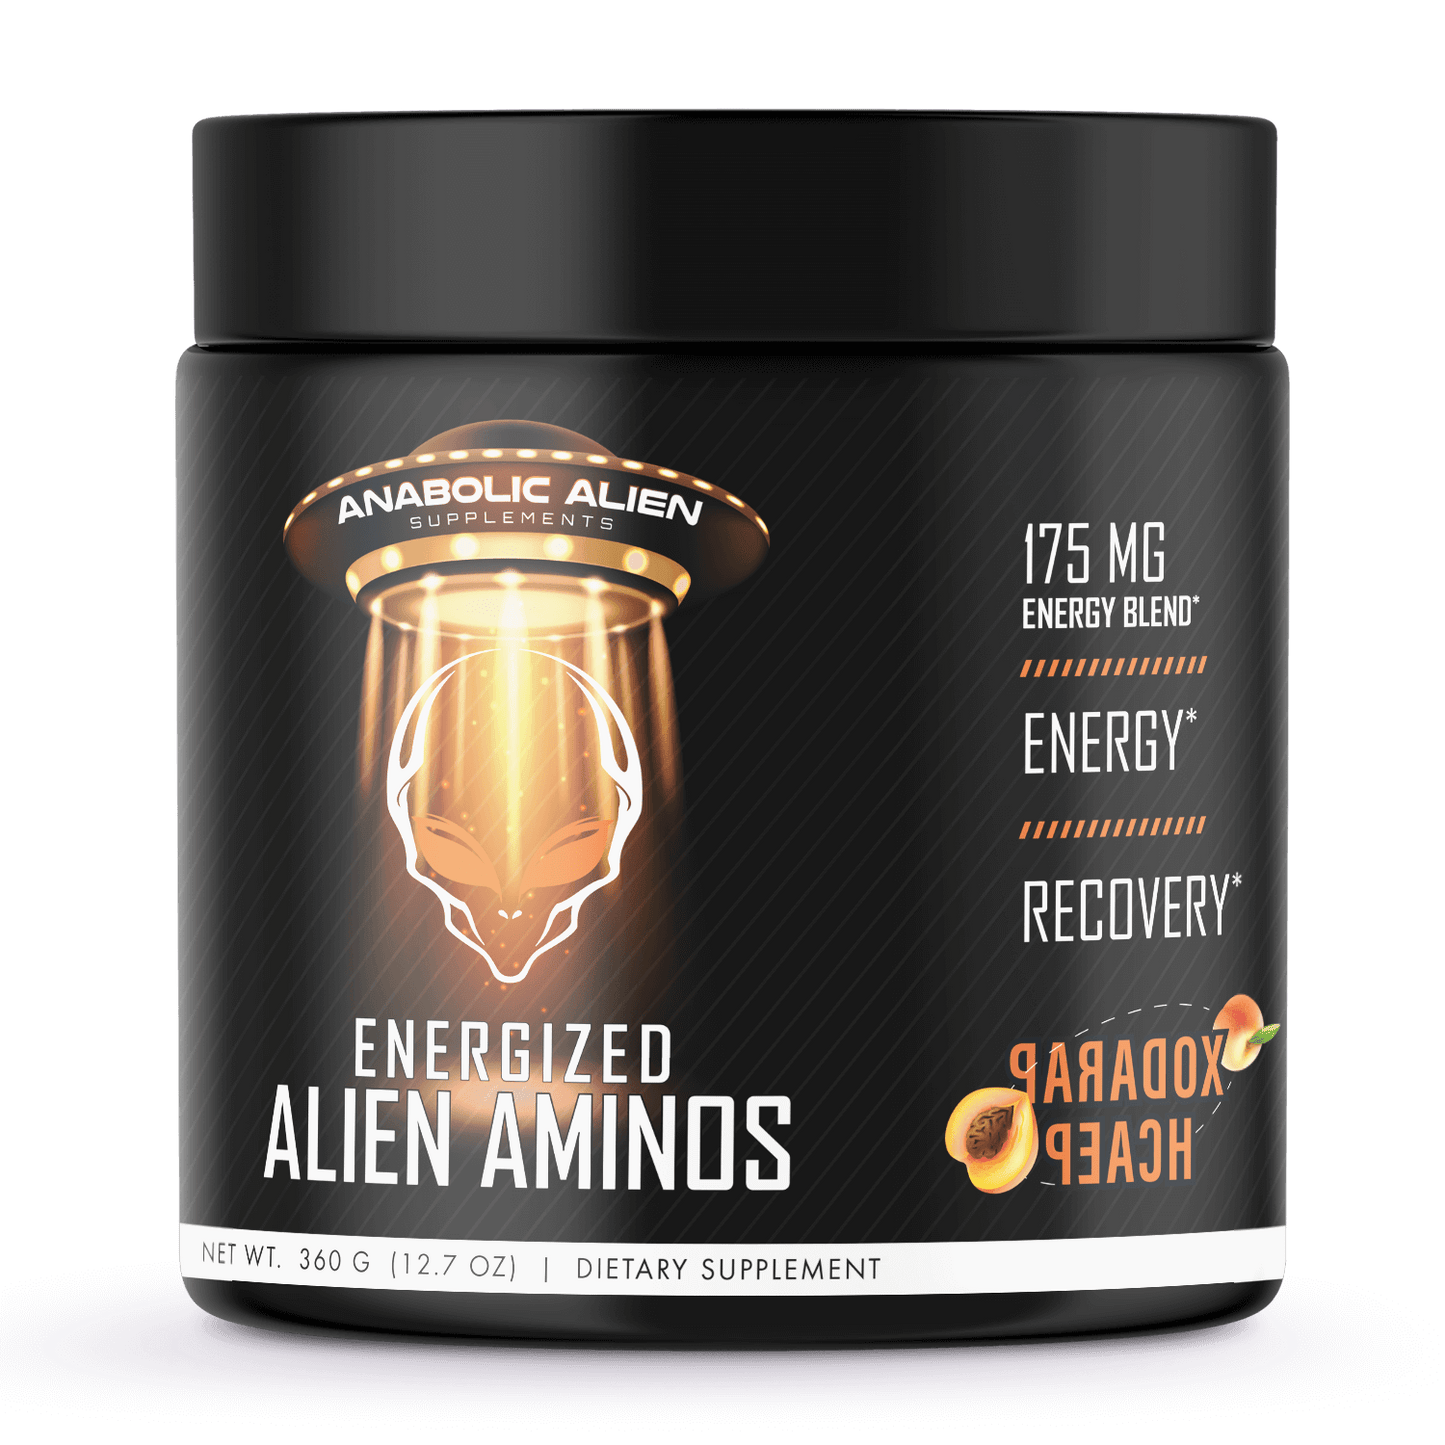 Energized Alien Aminos